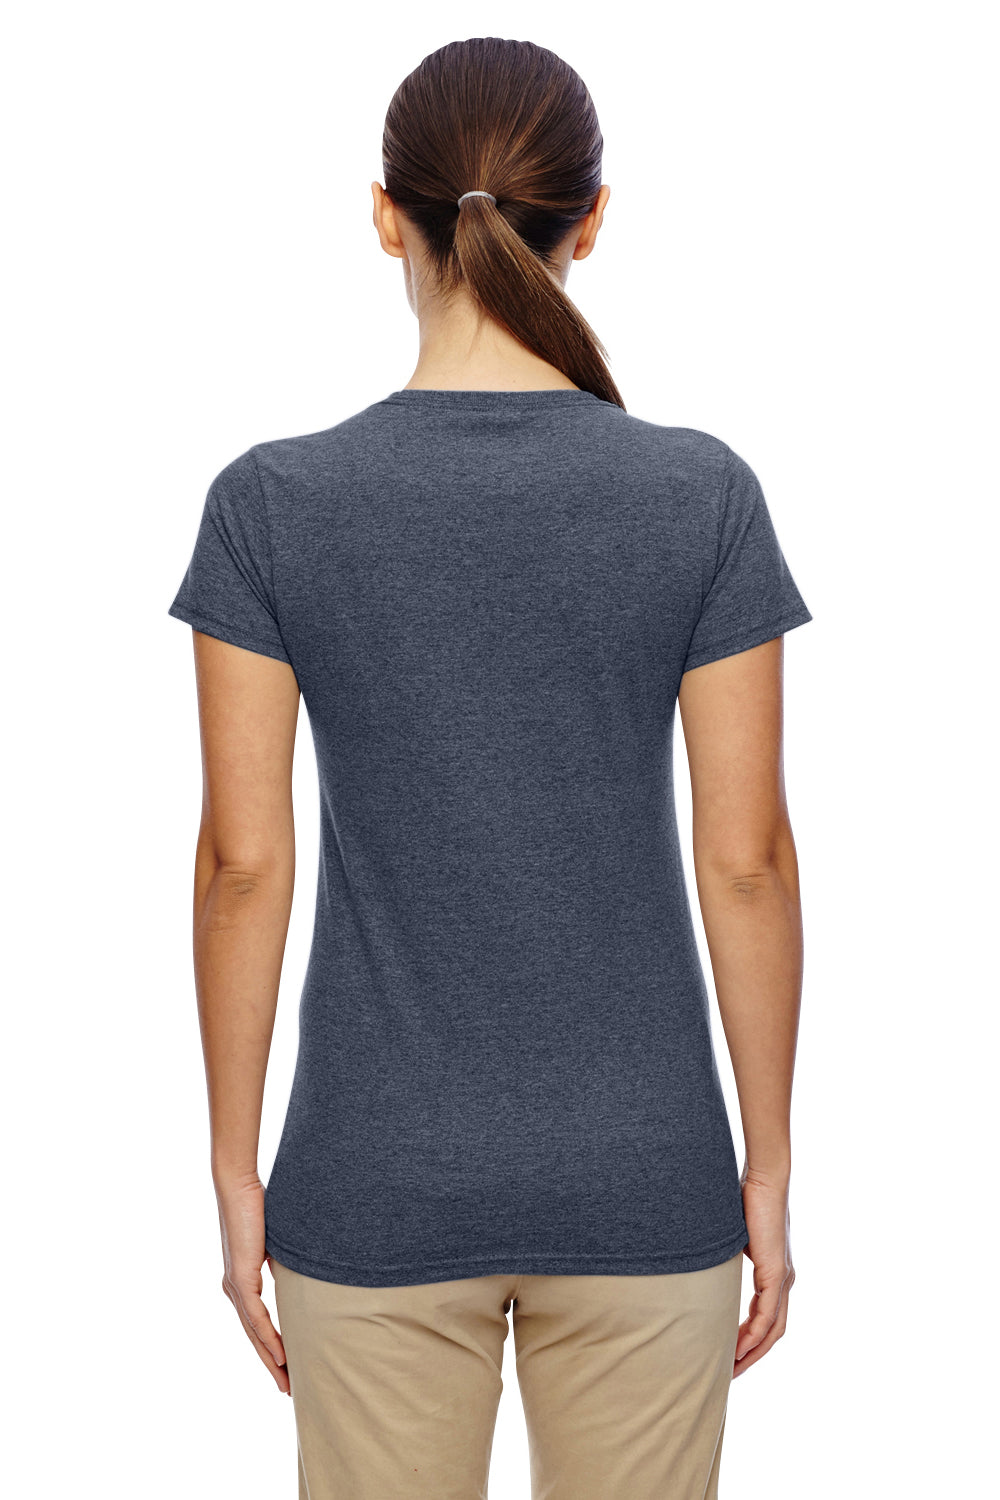 Gildan G500L Womens Short Sleeve Crewneck T-Shirt Heather Navy Blue Back